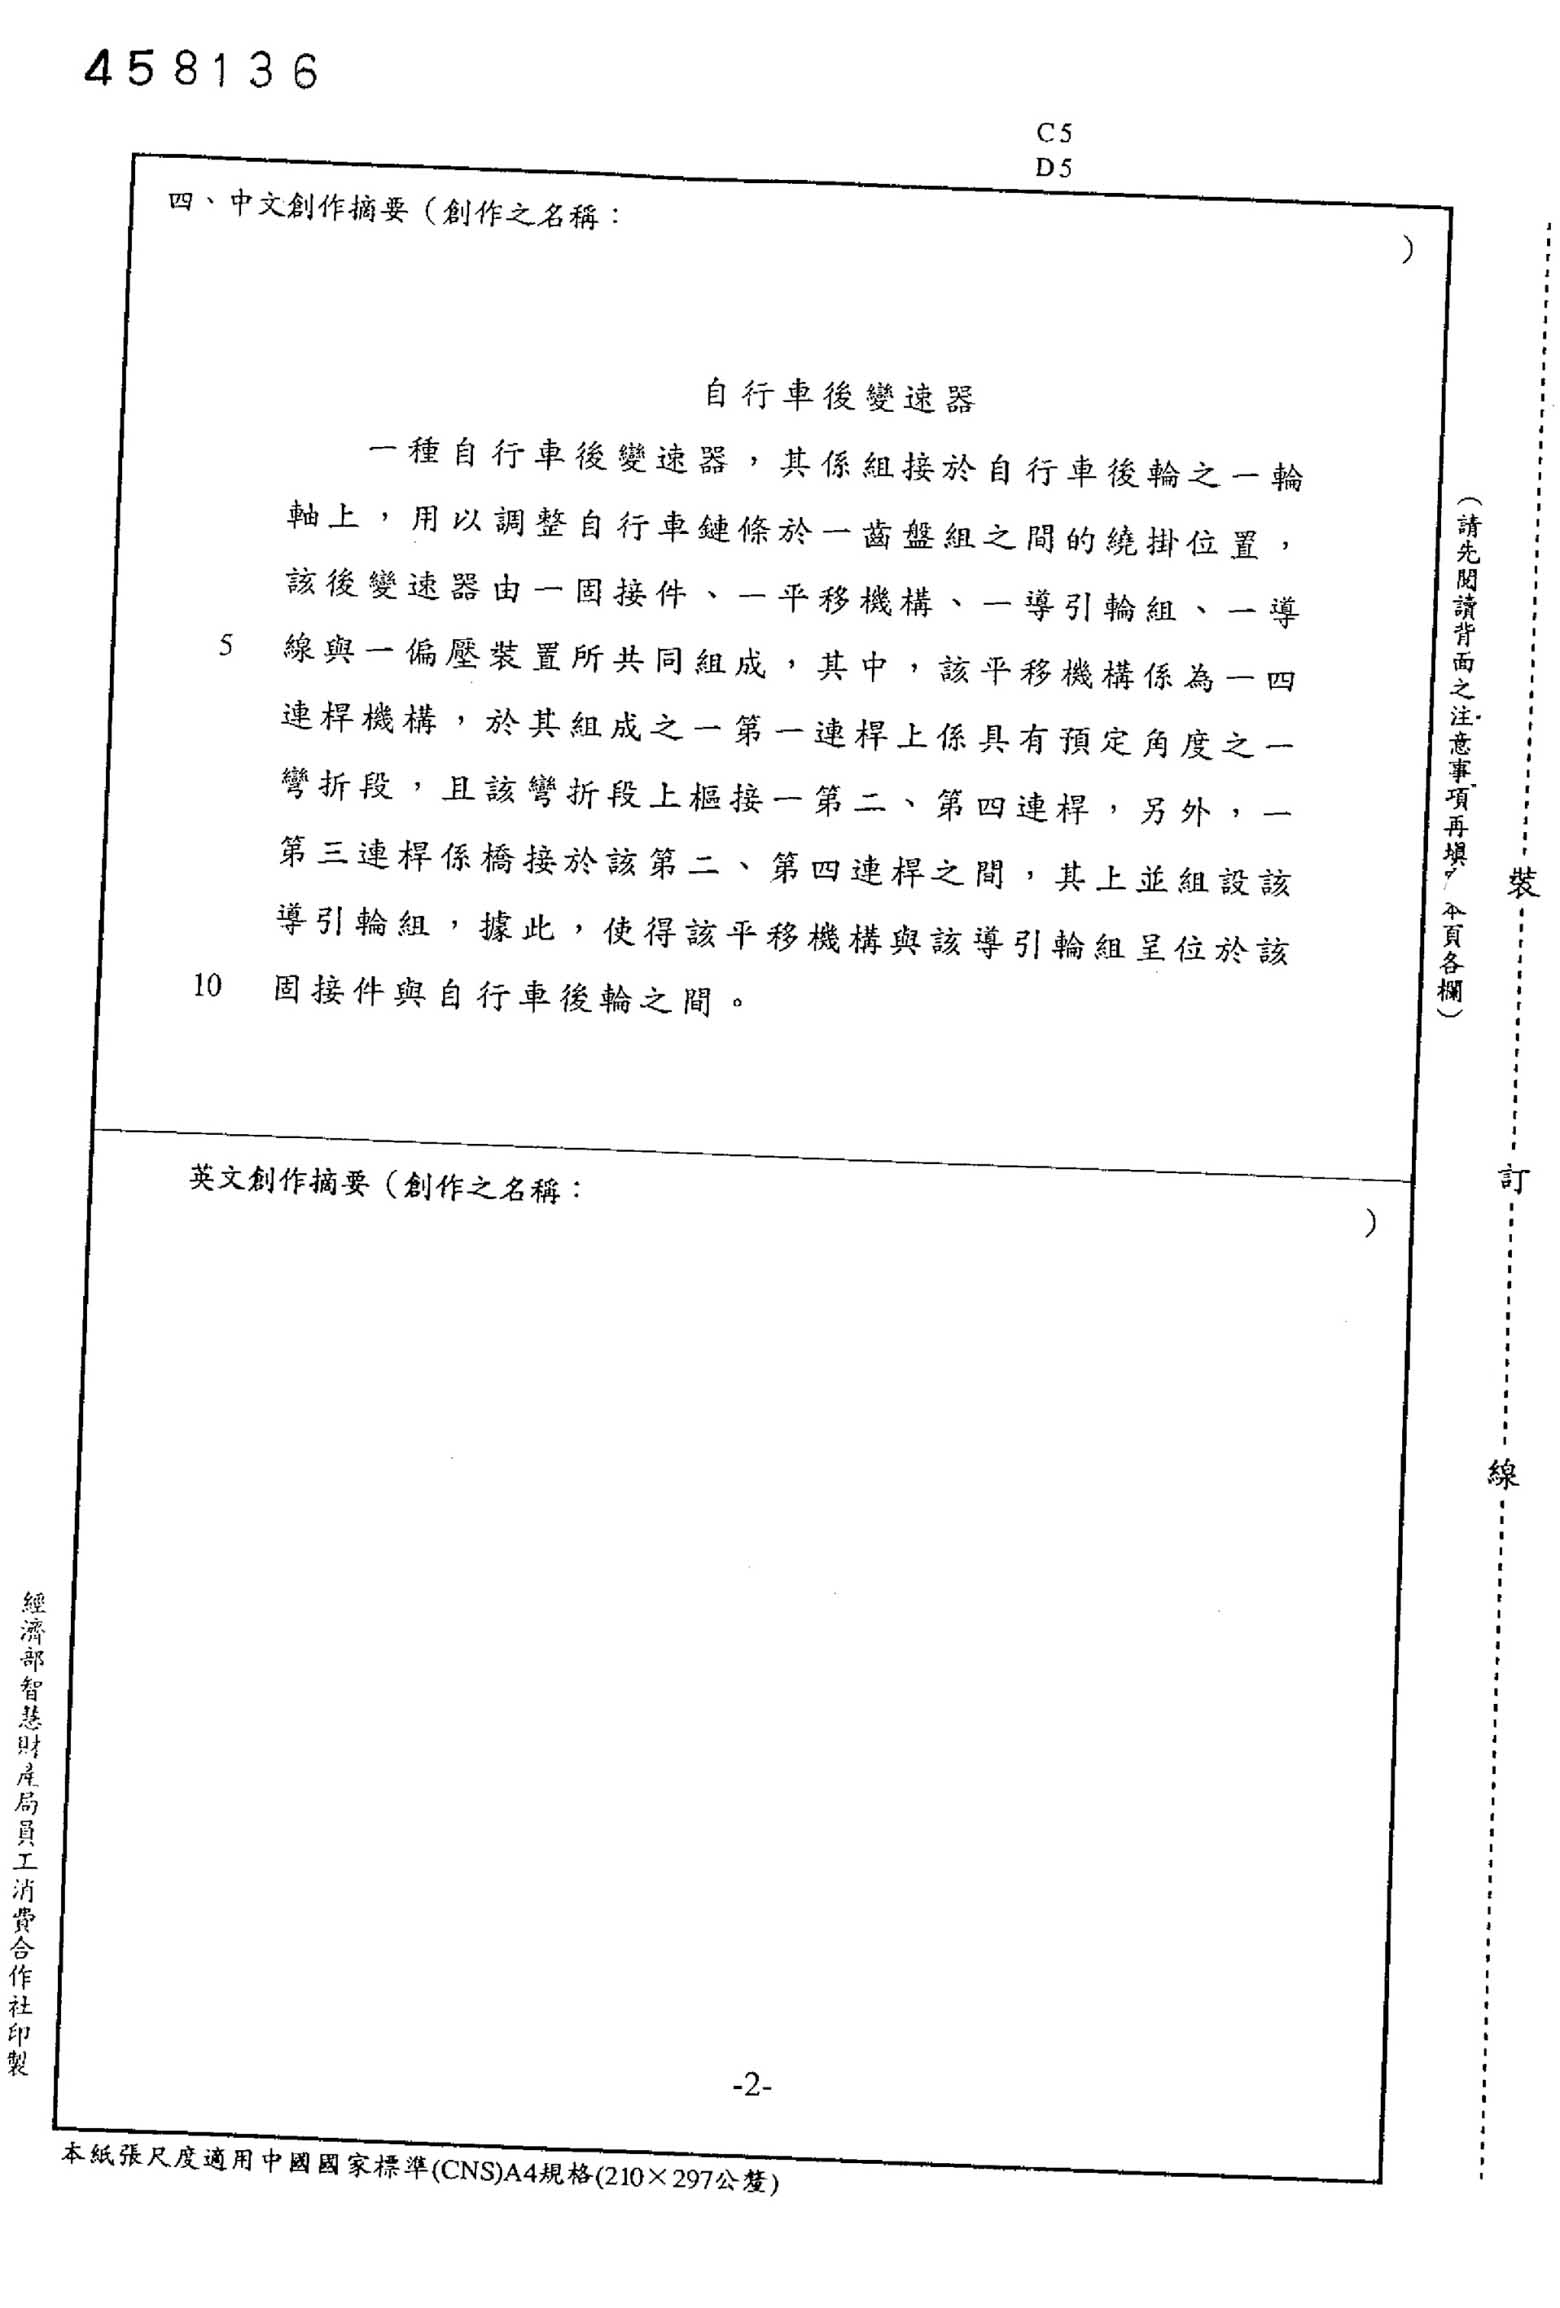 Taiwan patent 458,136 - Falcon scan 2 main image